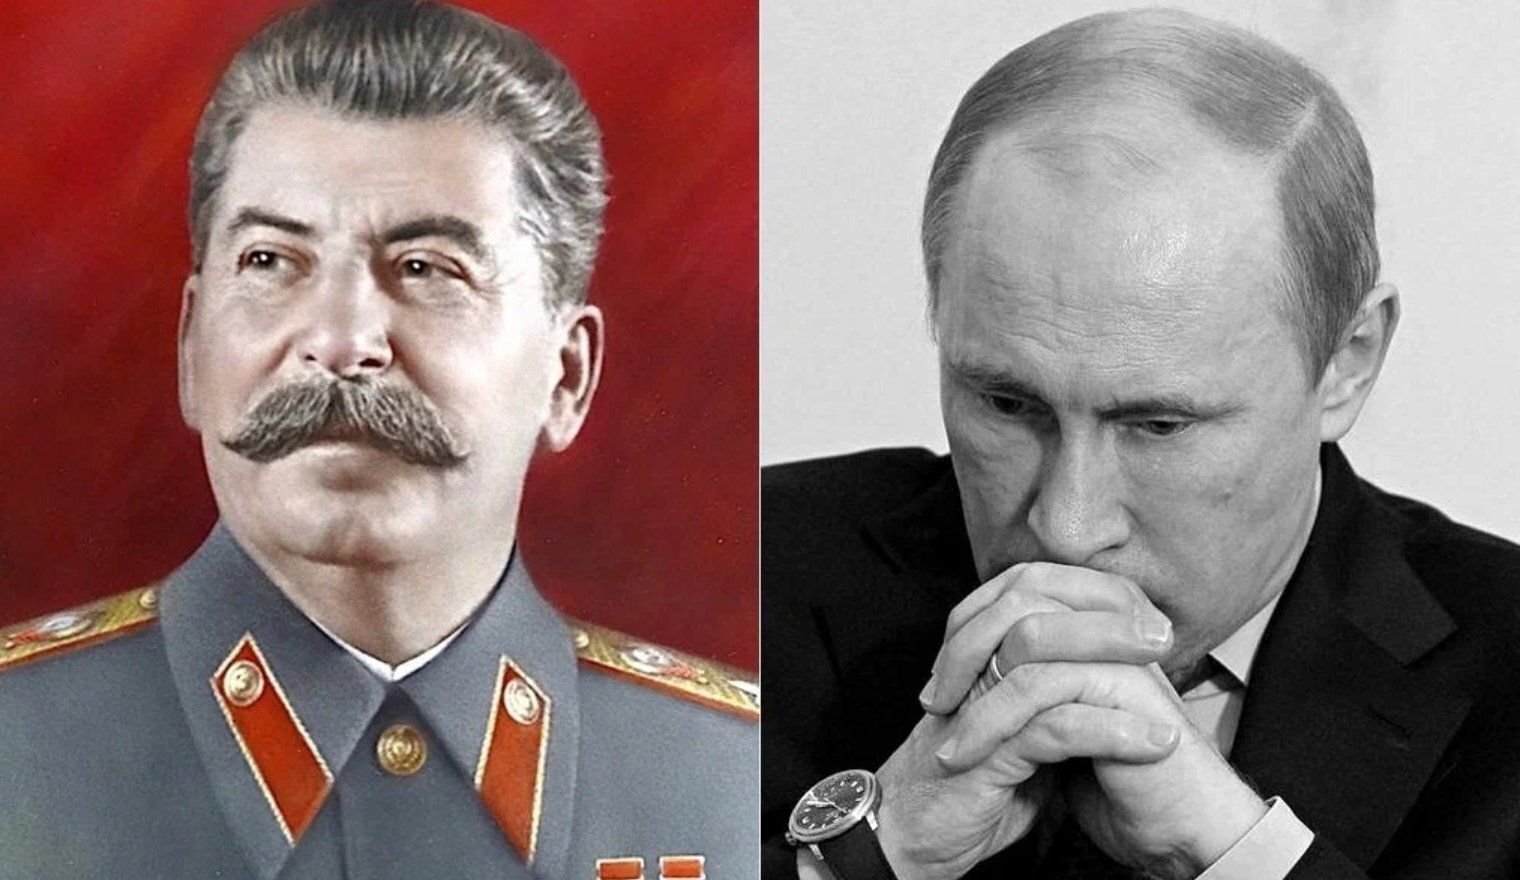 Глава правительства после сталина. ПУ И И Сталин. Портрет Сталина и Путина.